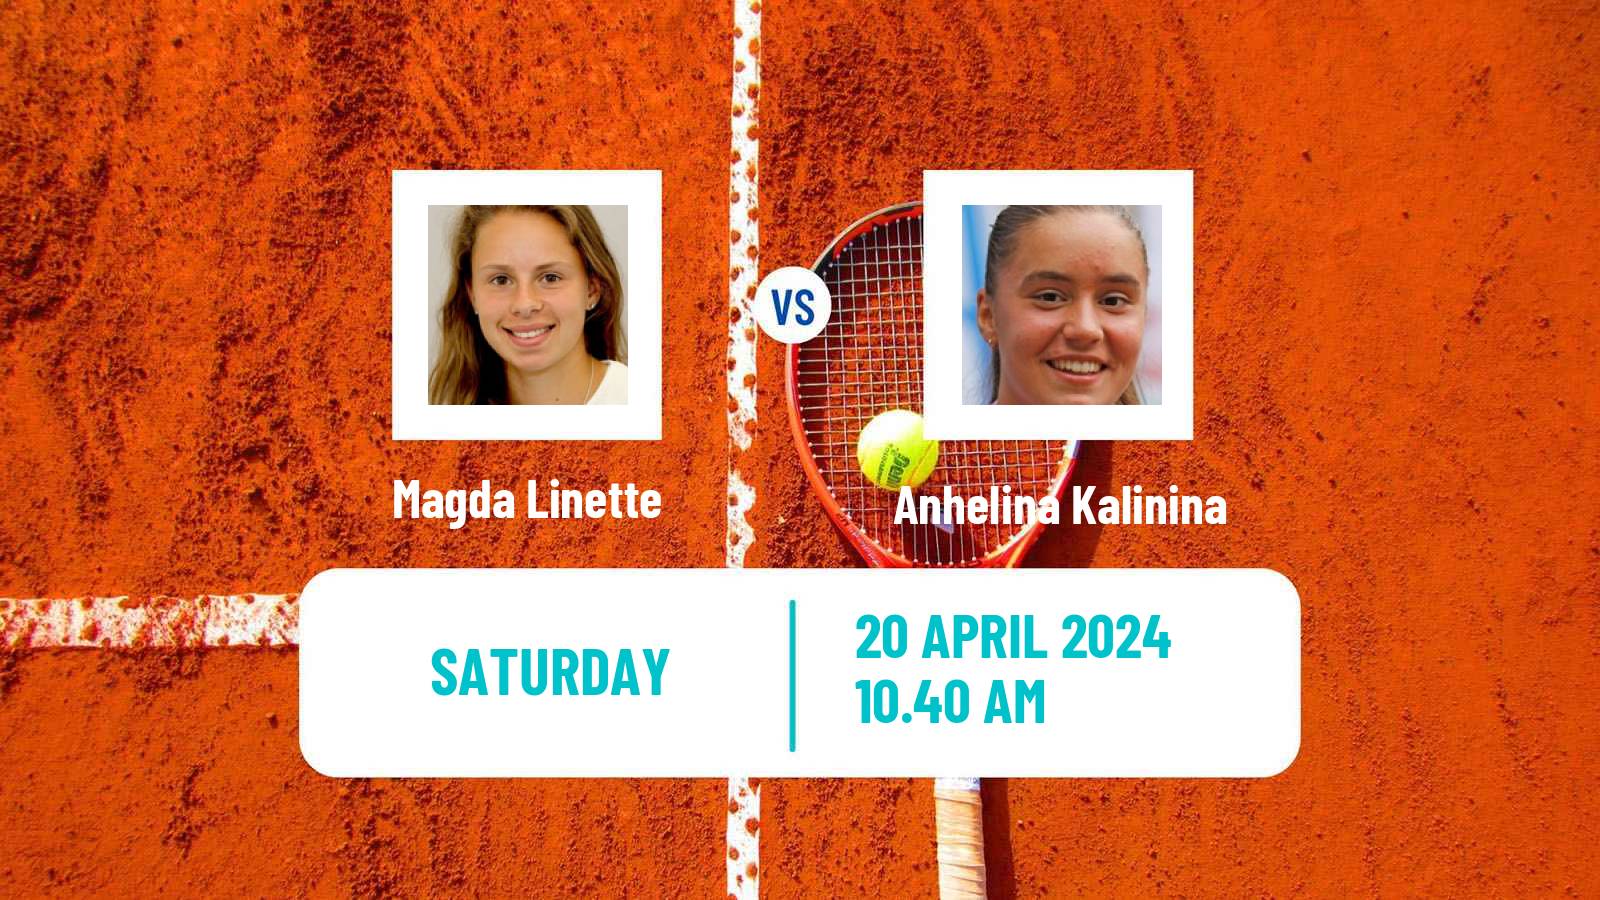 Tennis WTA Rouen Magda Linette - Anhelina Kalinina